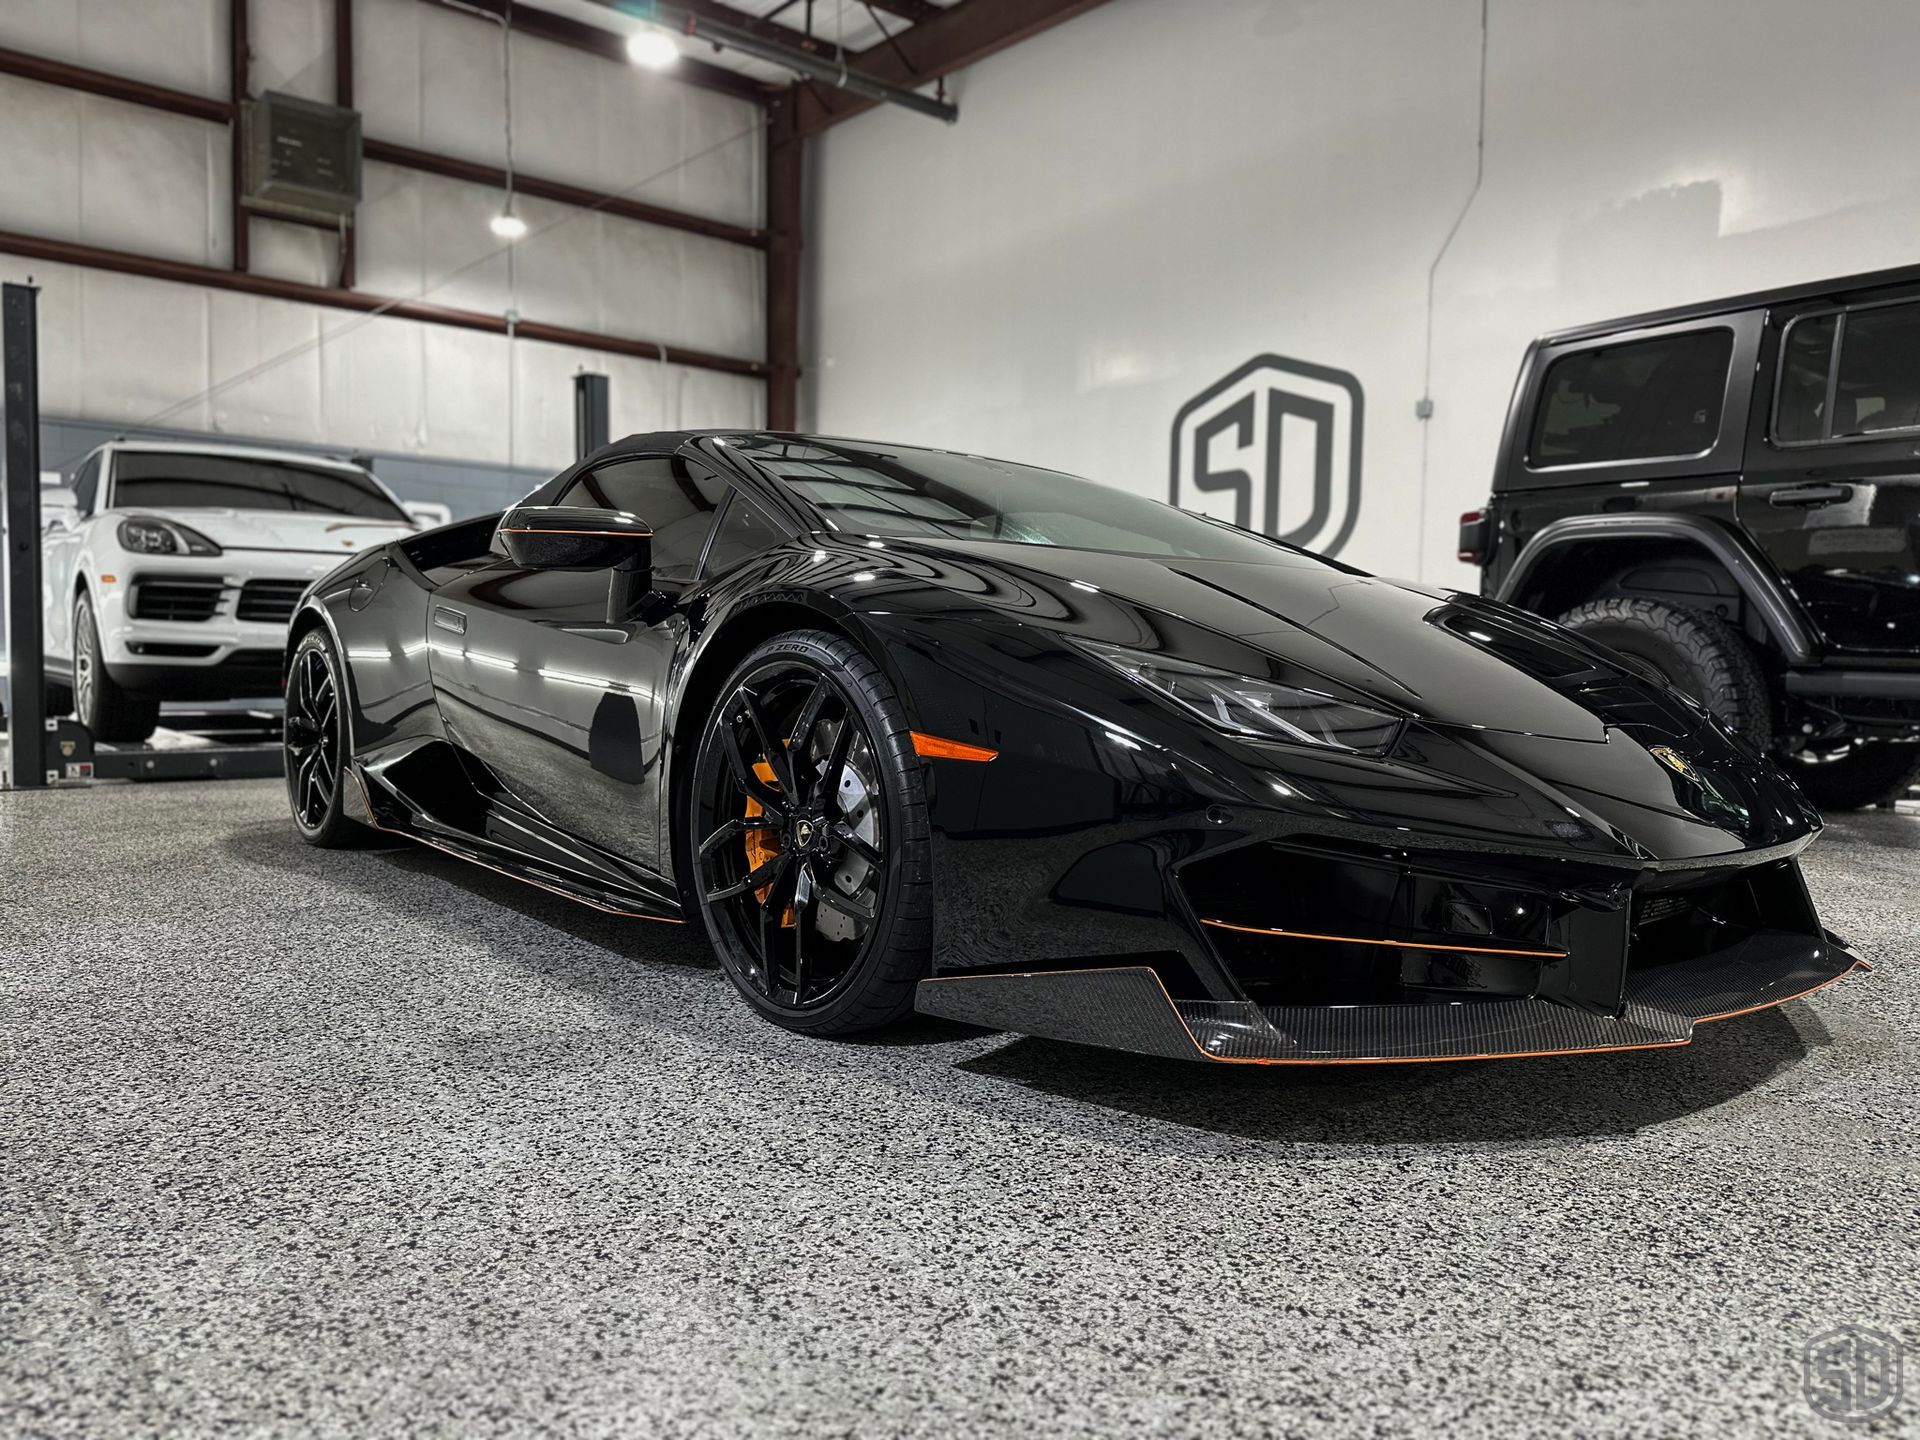 2019 Lamborghini Huracan Spider ExoShield Windshield Protection Film Orlando, Florida USA